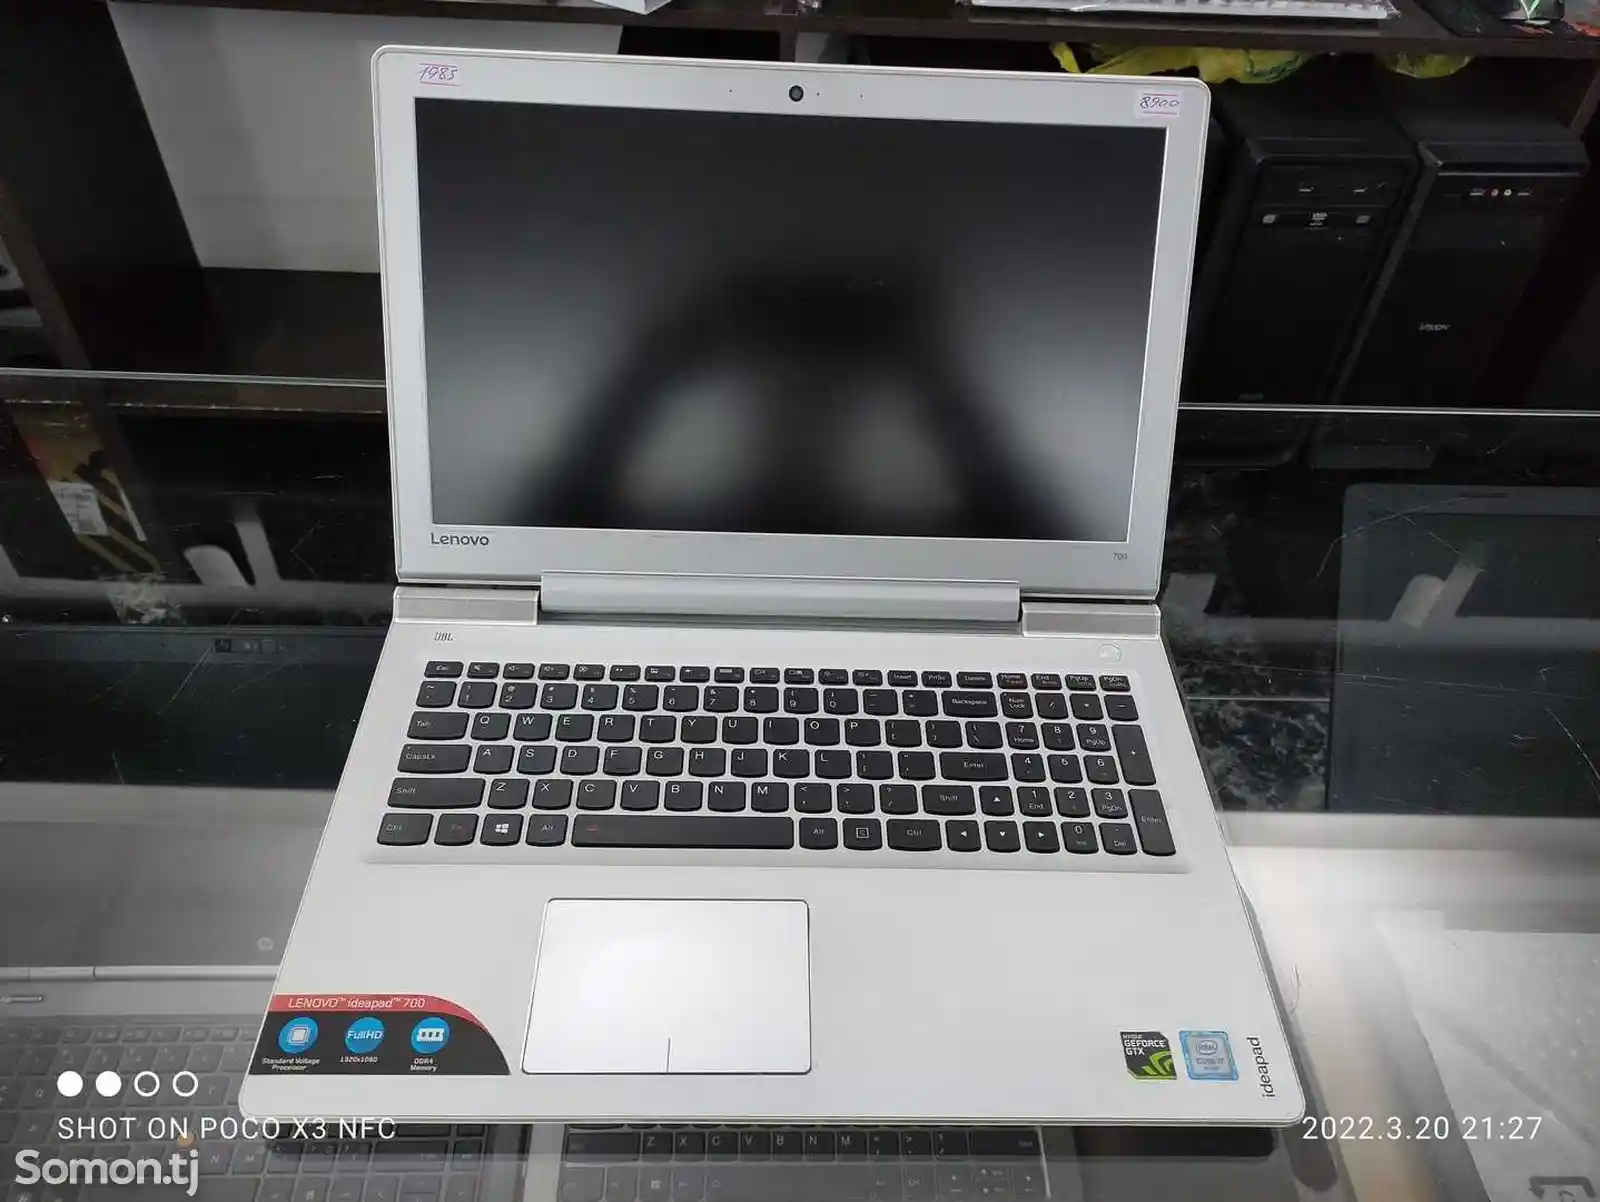 Игровой Ноутбук Lenovo Ideapad 700 Core i7-6700HQ GTX 950M 2GB-2